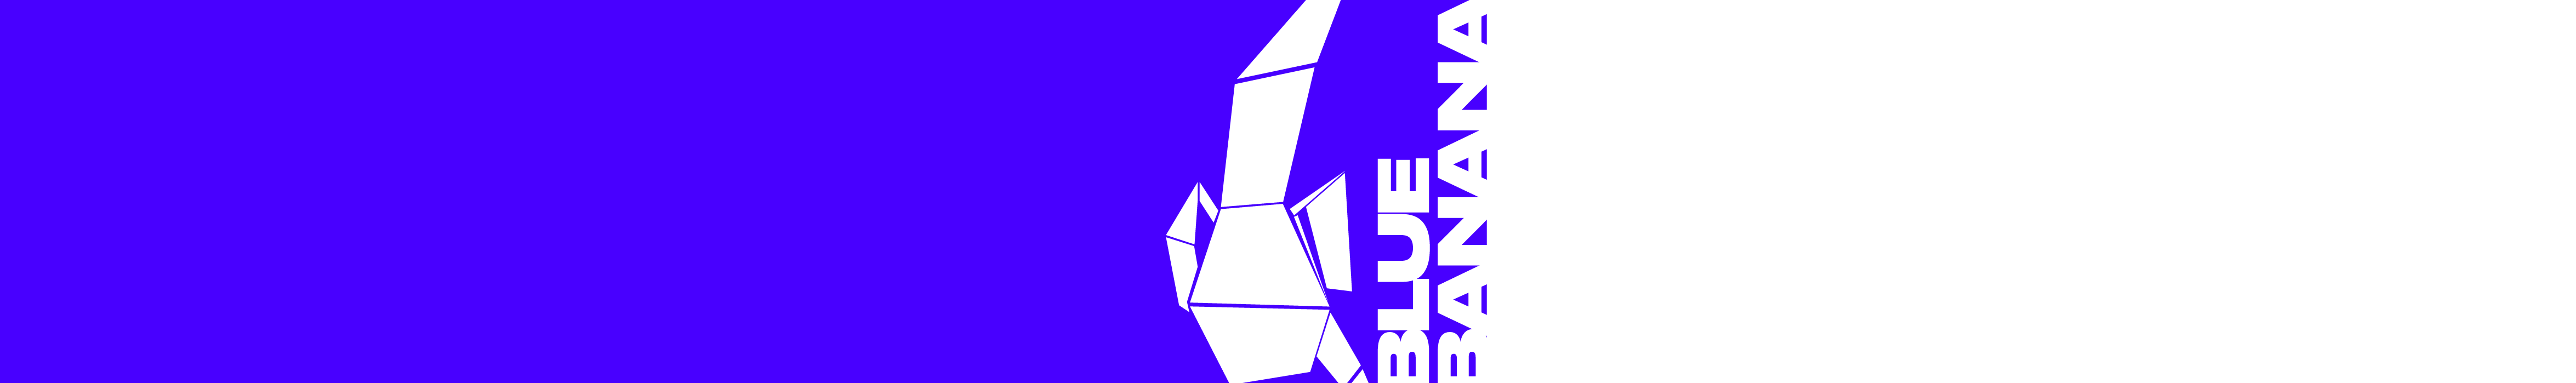 Blue Banana's profile banner